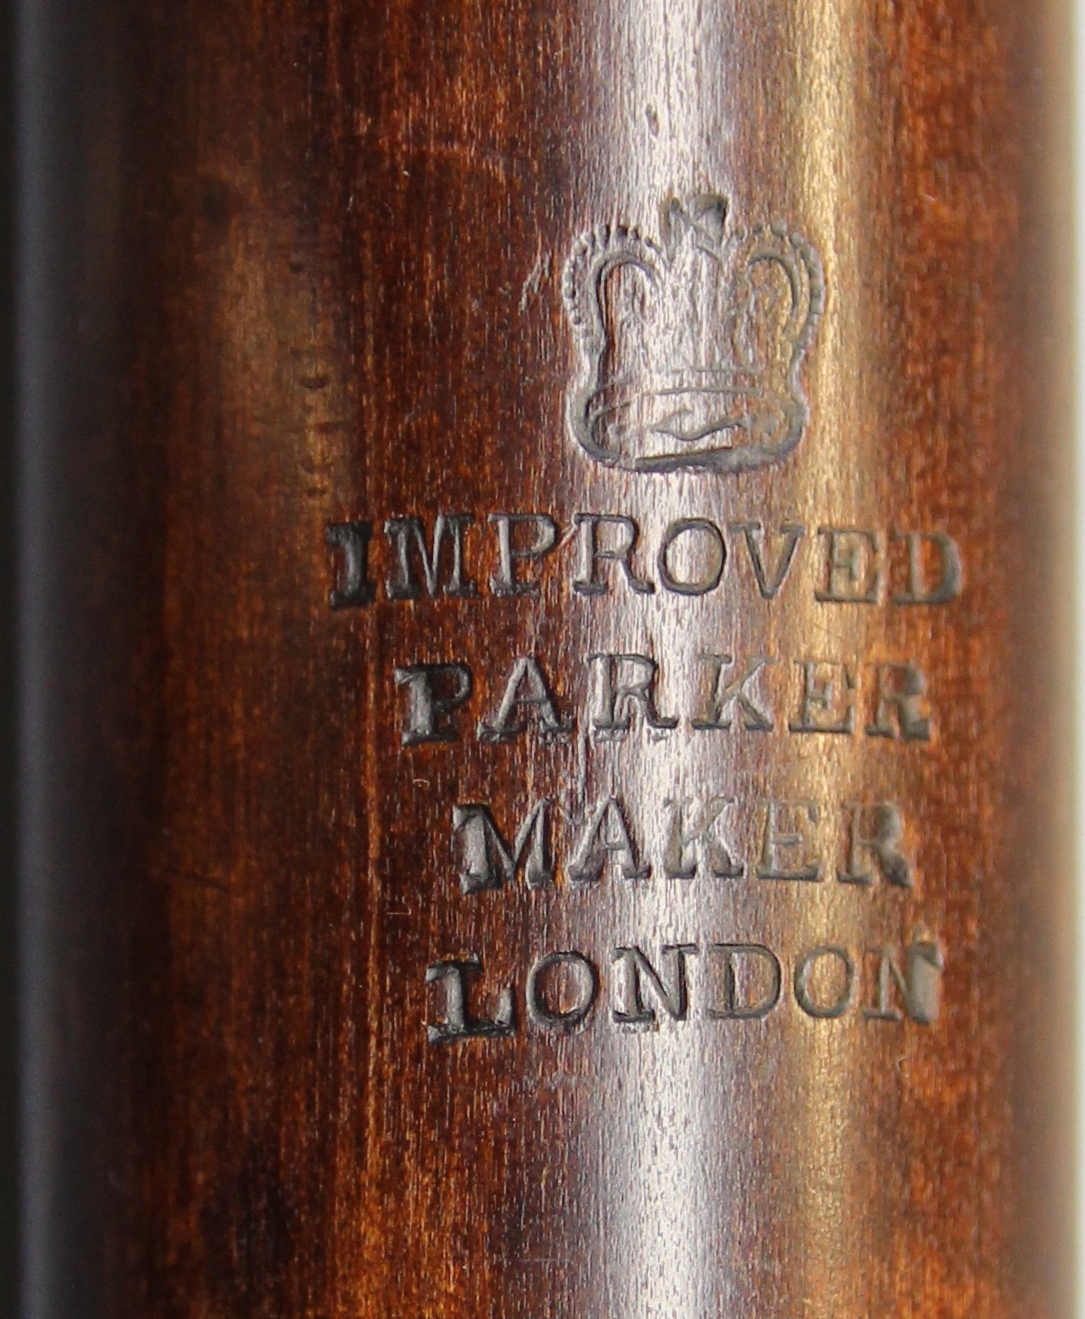 Traversfloete improved Parker Maker London Stempel